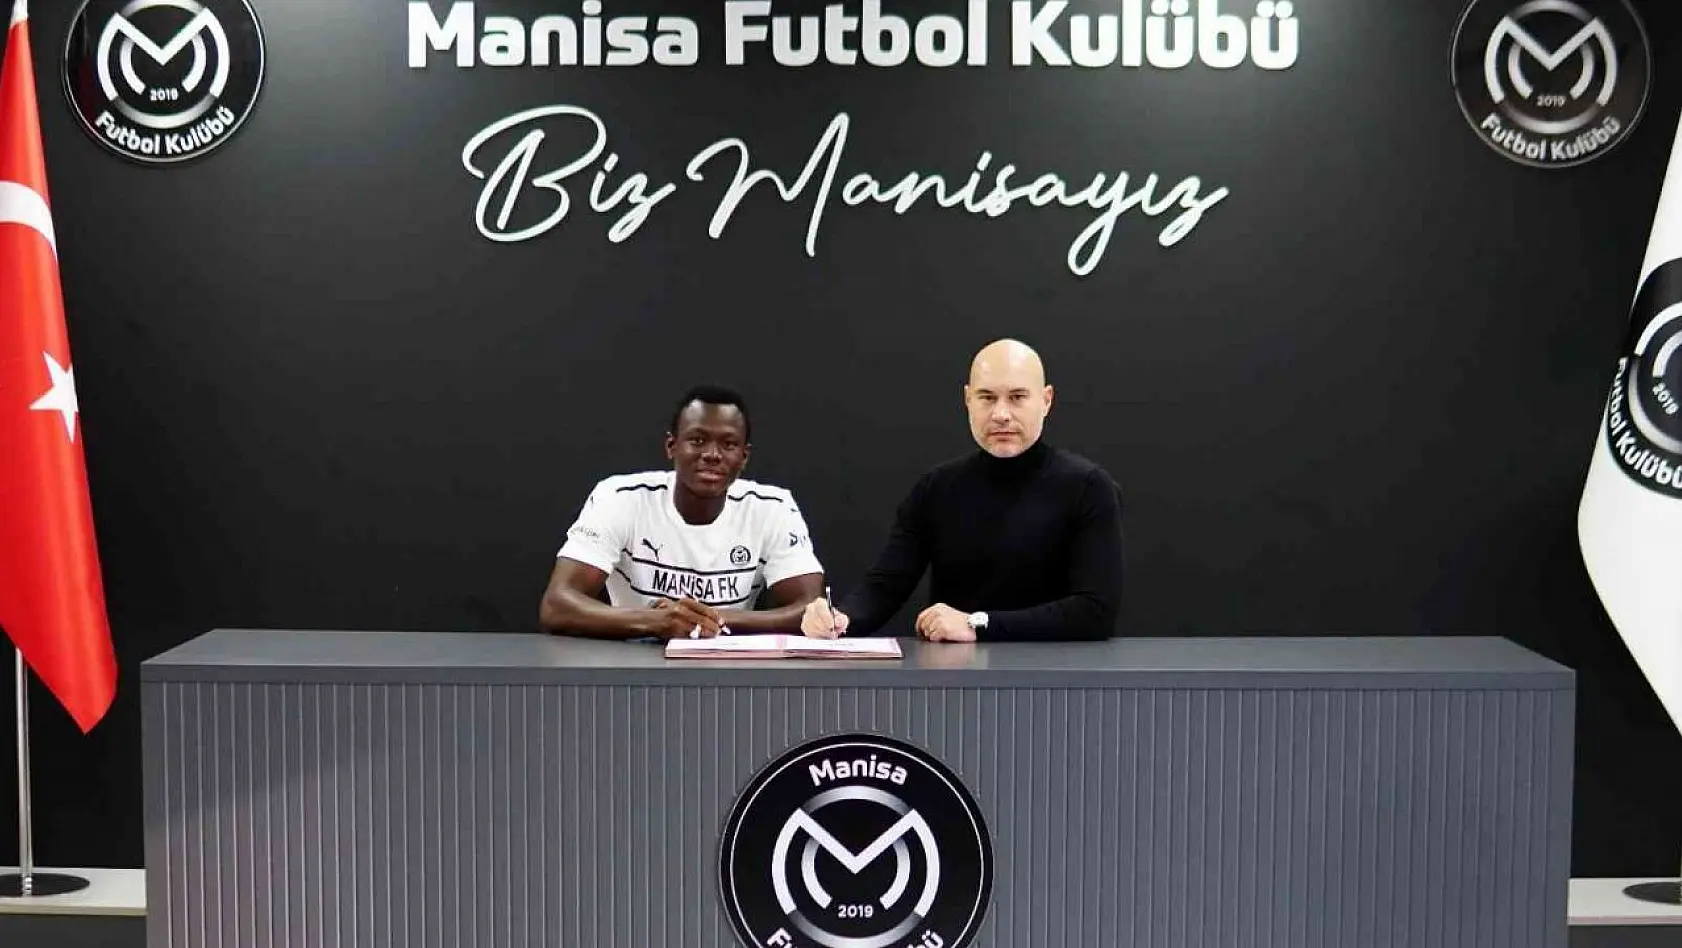 Manisa FK, Mamadou Cissokho ile profesyonel sözleşme imzaladı